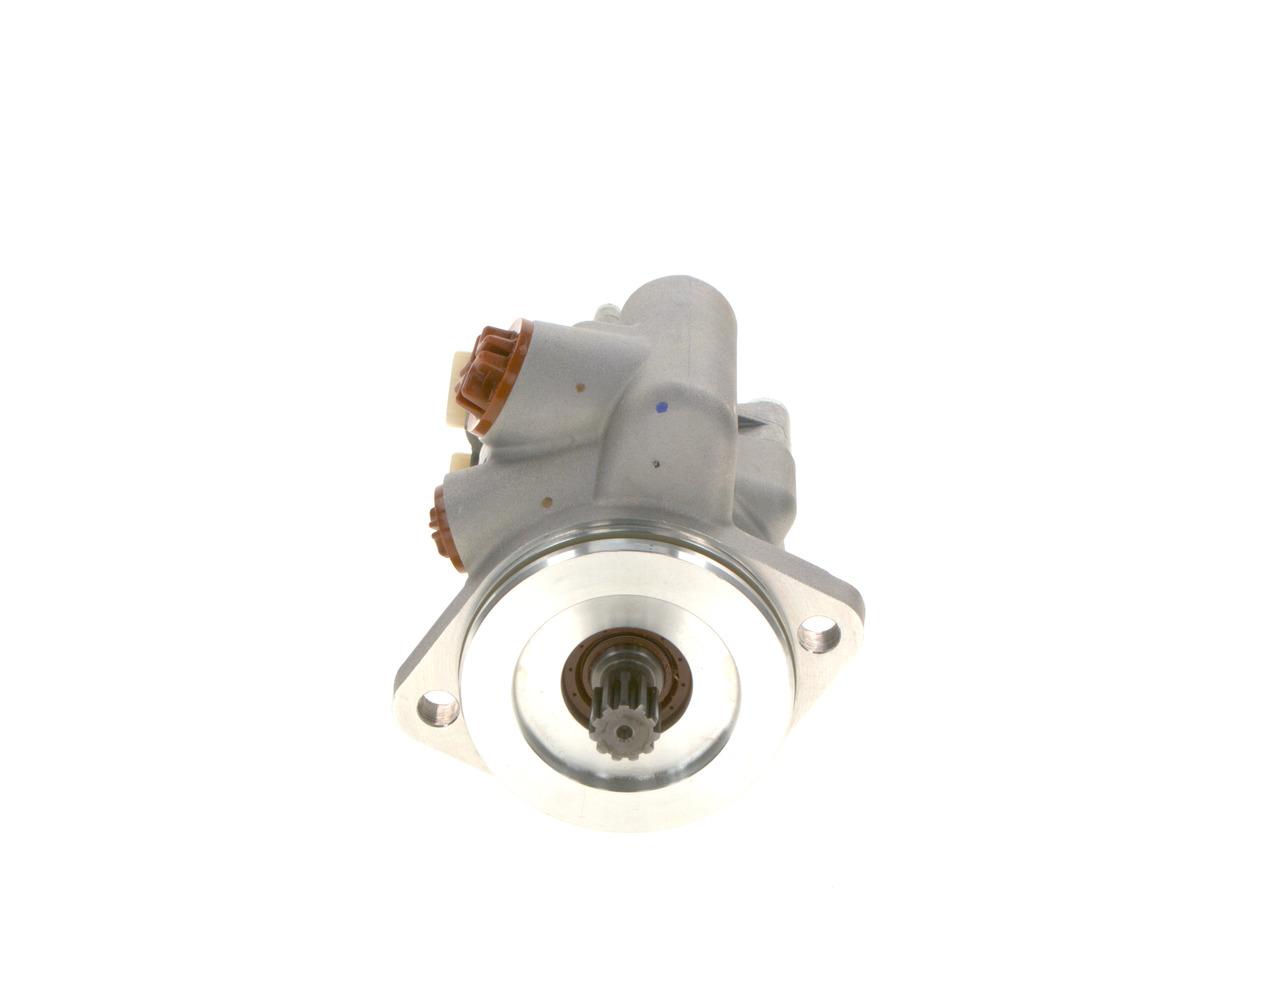 BOSCH K S00 002 452 Power steering pump Hydraulic, Pressure-limiting Valve, Tandem Pump, Anticlockwise rotation